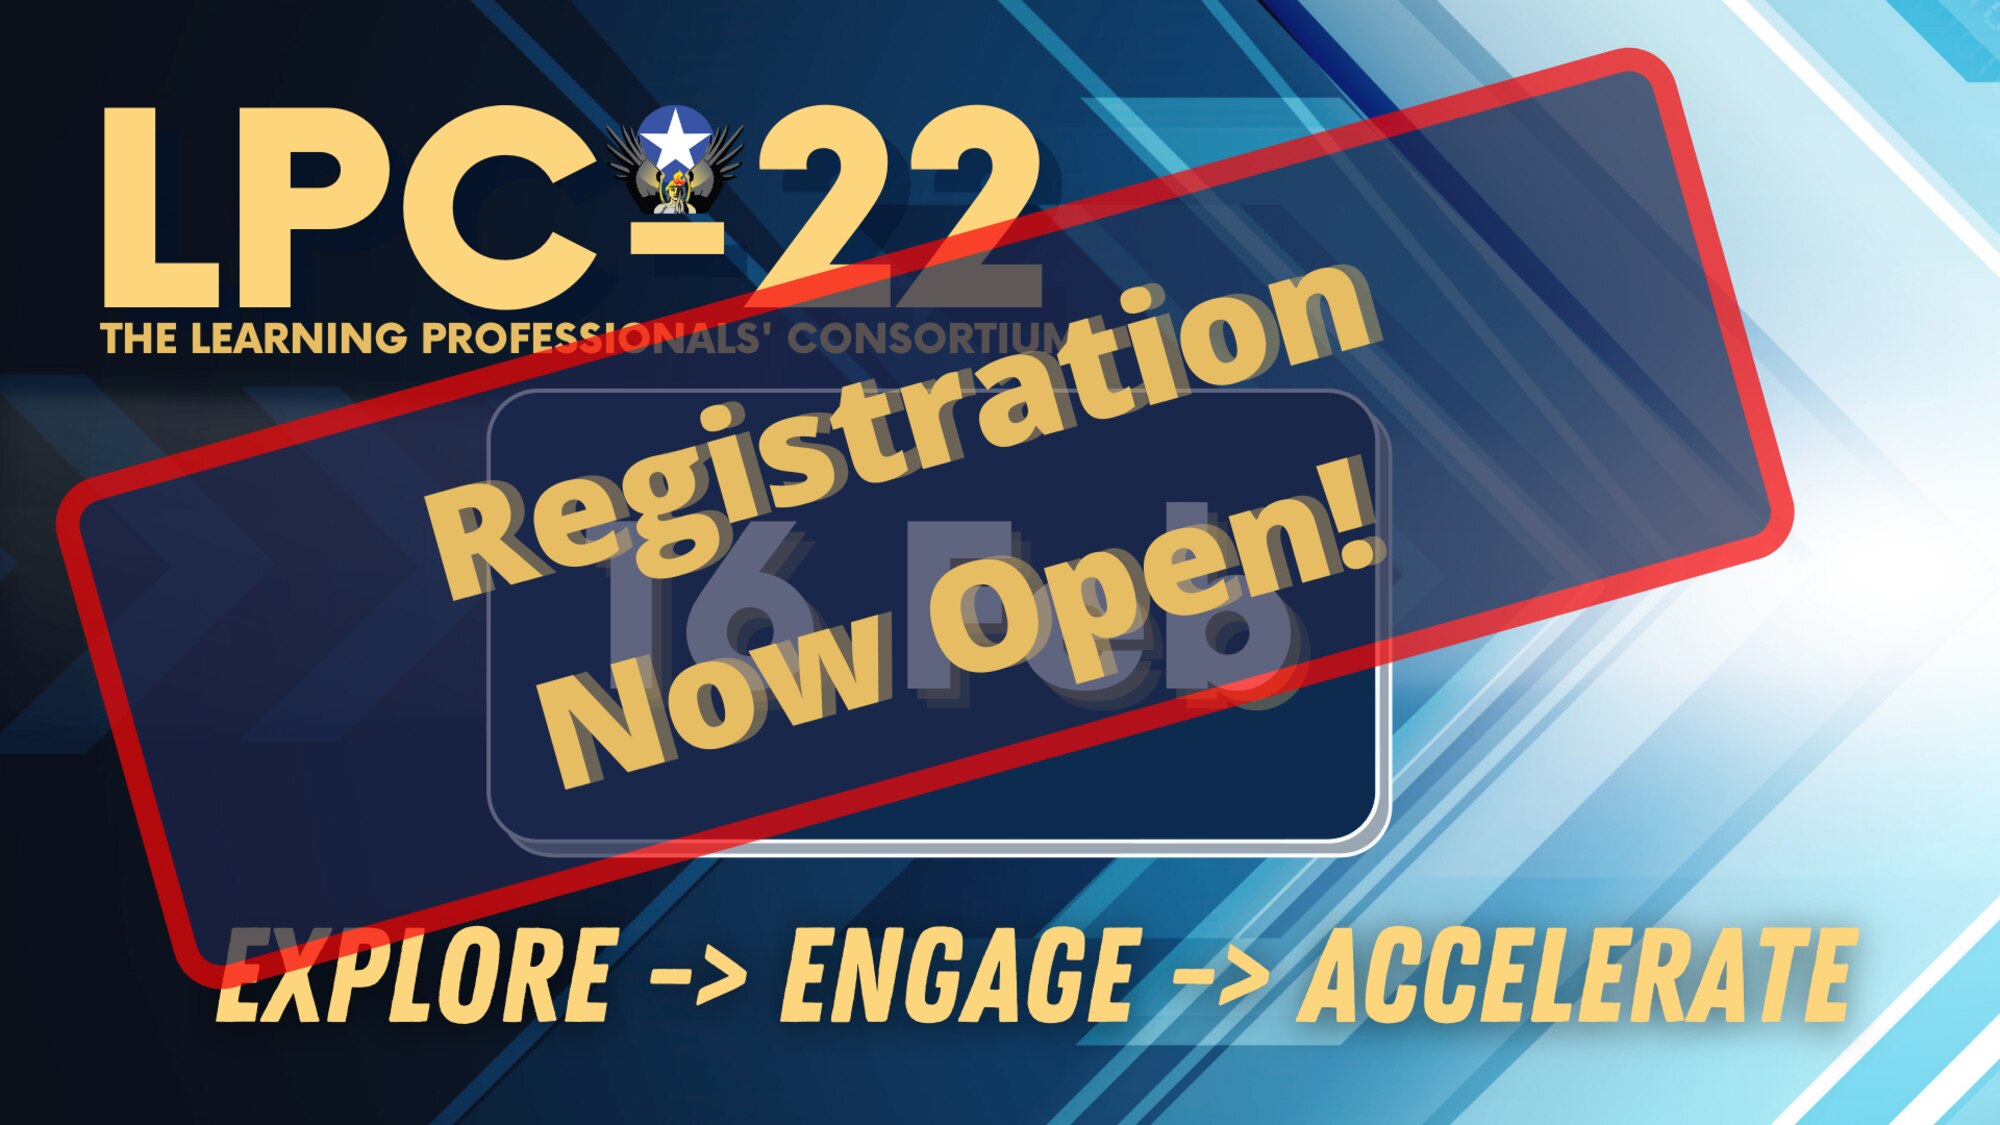 2022 Learning Professionals Consortium (LPC-22) 16 Feb Registration Now Open